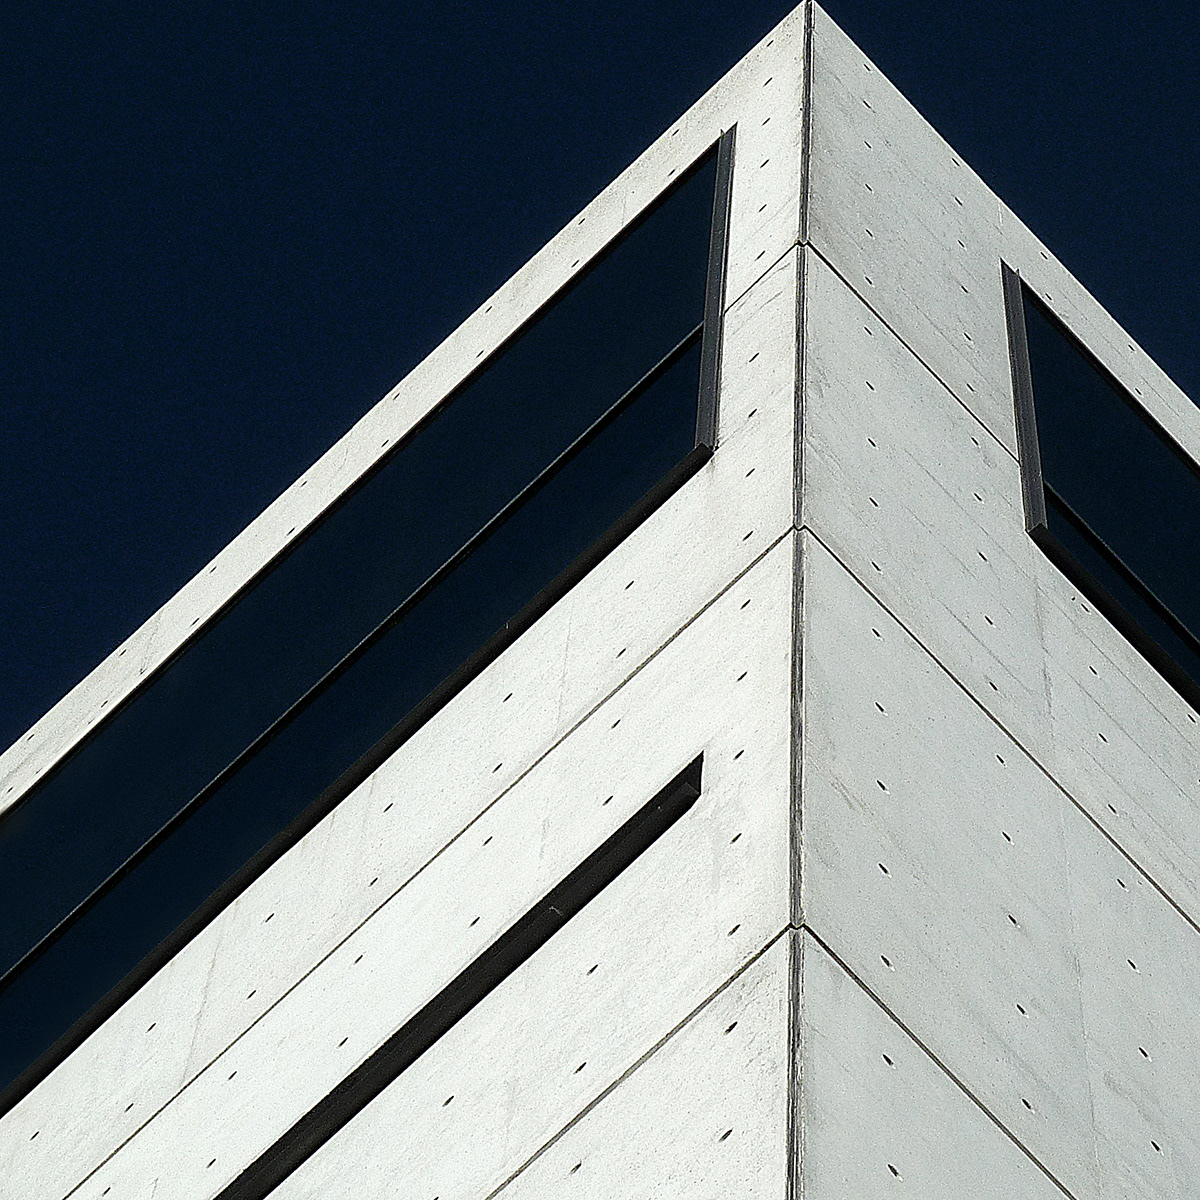 trondheim norway Minimalism modern architecture urbanity minimal concrete architectural photography Scandinavia